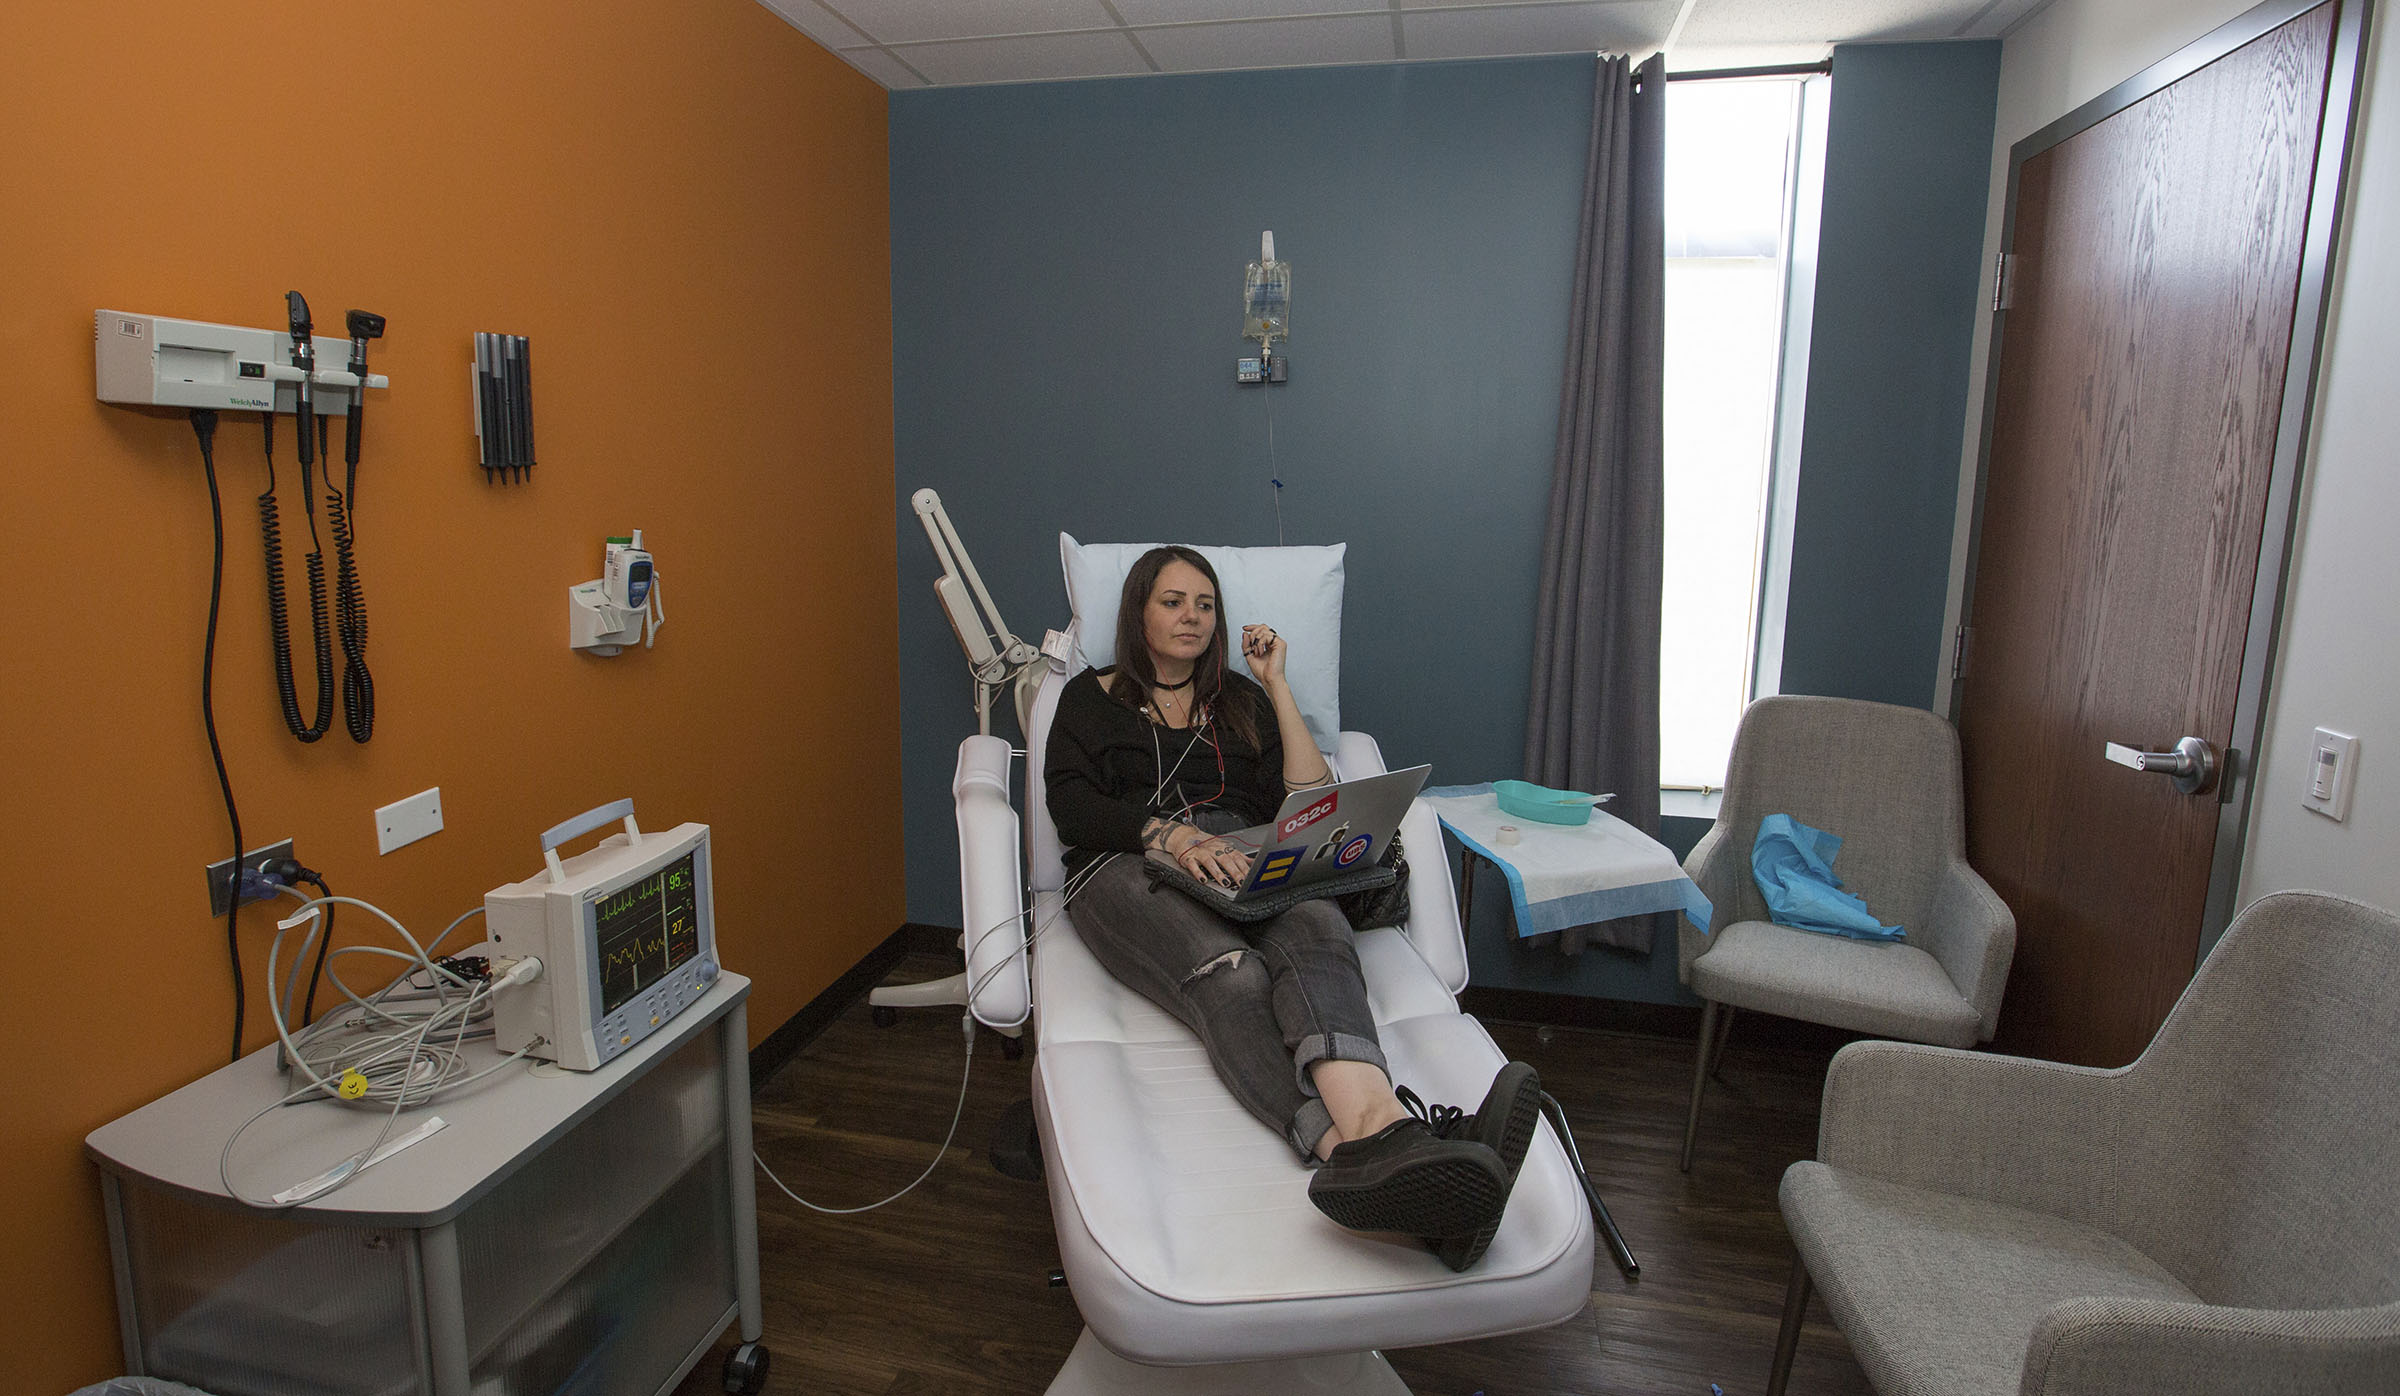 Wisconsin now has more ketamine clinics to treat depression